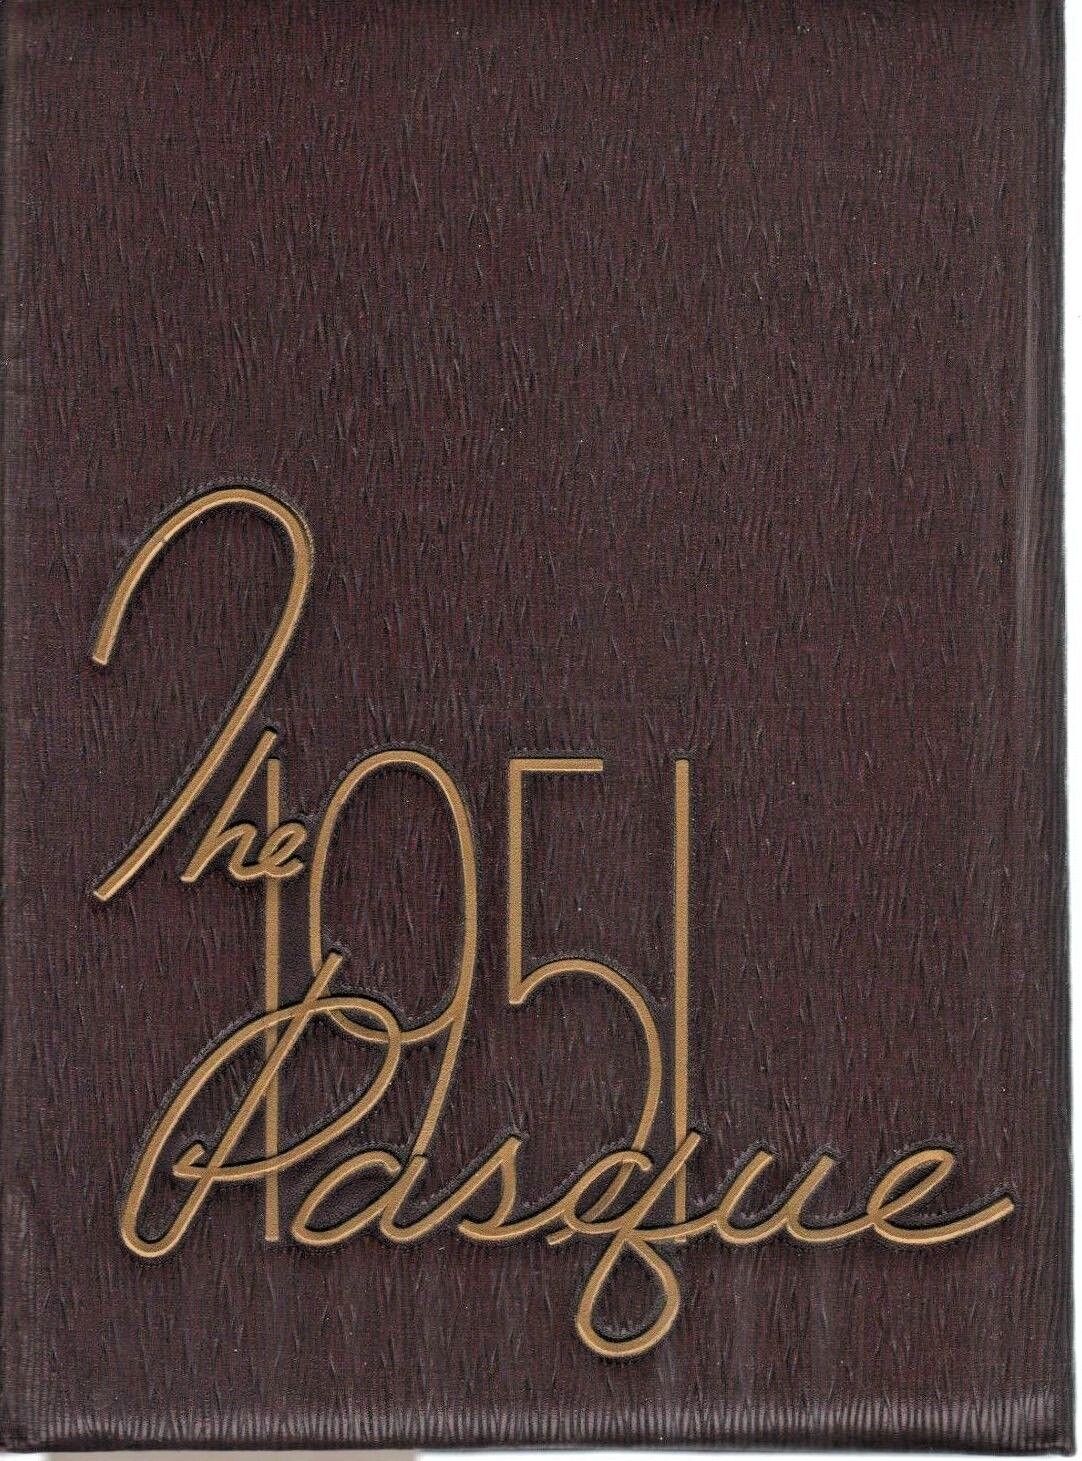 Original-1951 Yearbook-Northern State Teachers College-Aberdeen SD-The Pasque